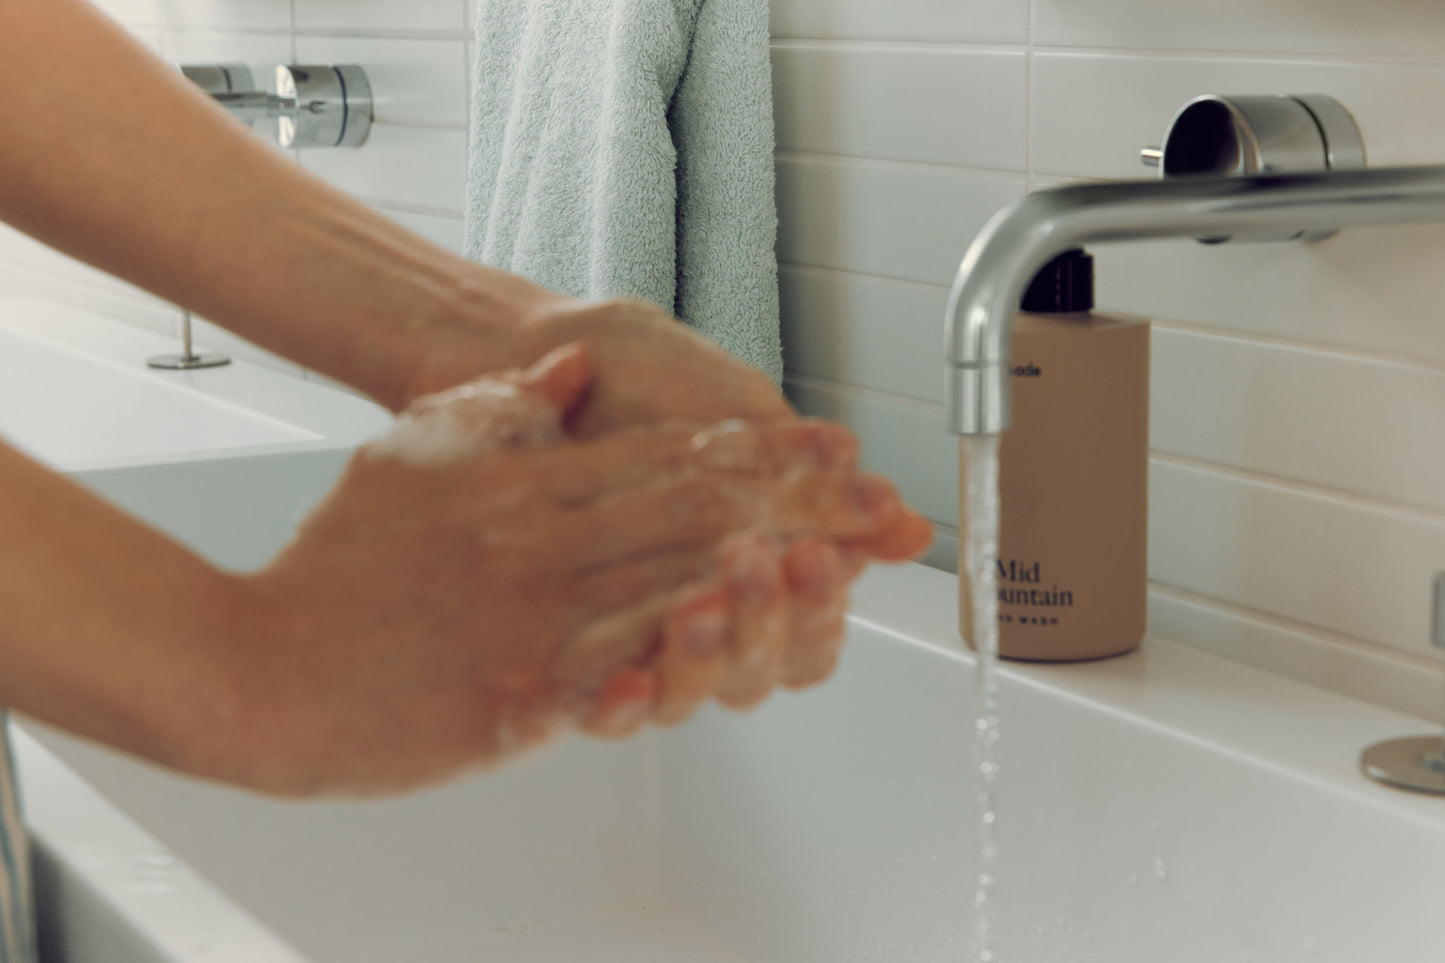 Pesade | Mid Mountain  Hand wash 300ml